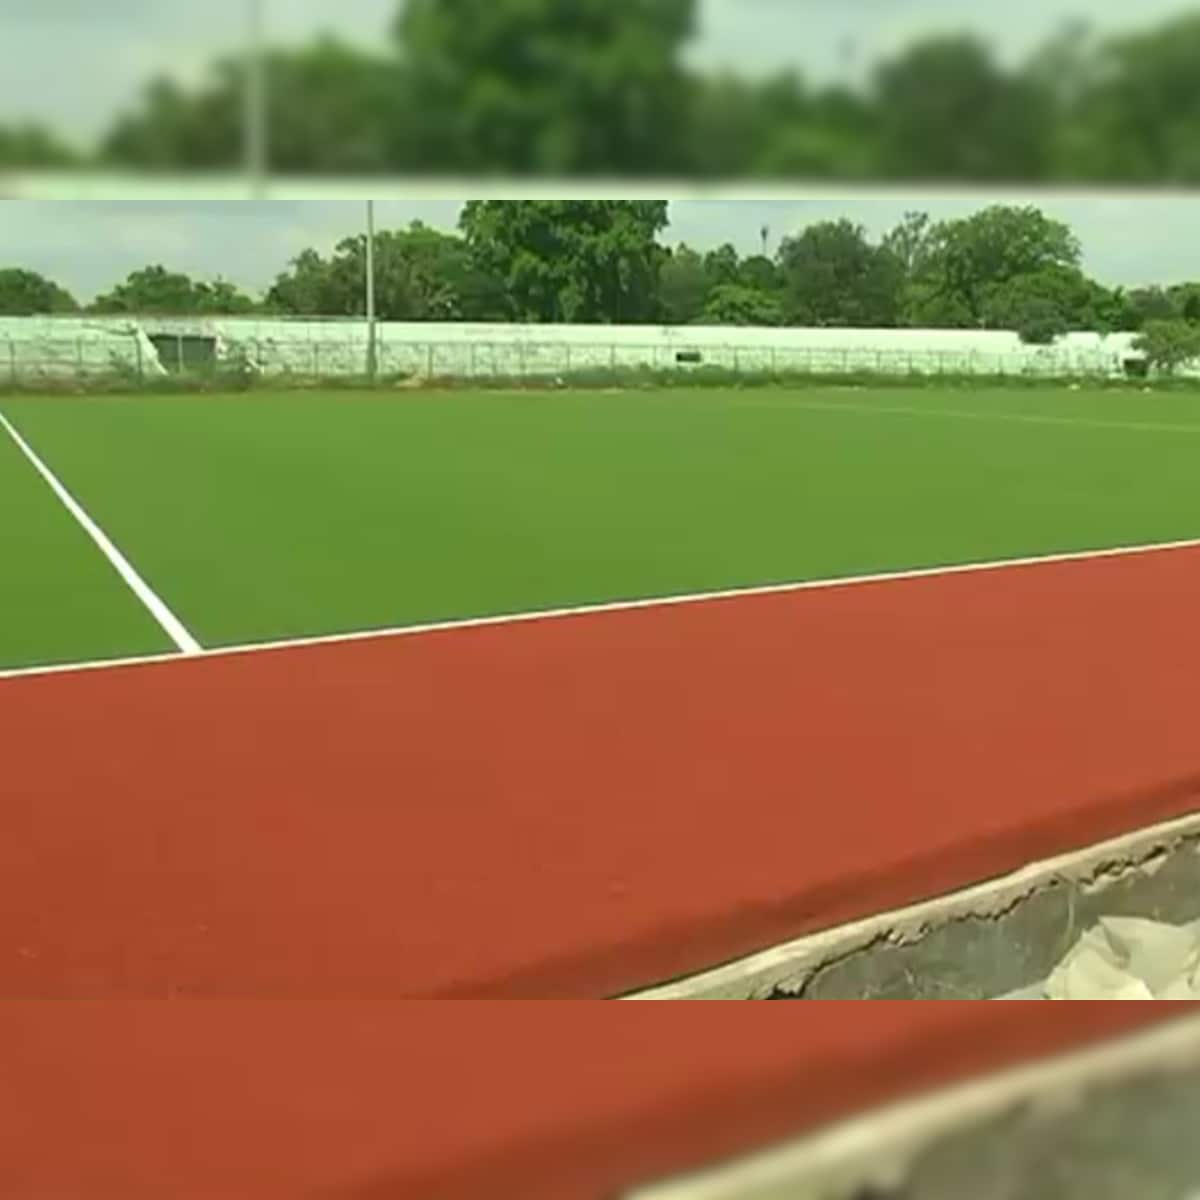 Meerut: Hockey players will get a big gift by 2022. Astro turf ready in  sports stadium – News18 हिंदी